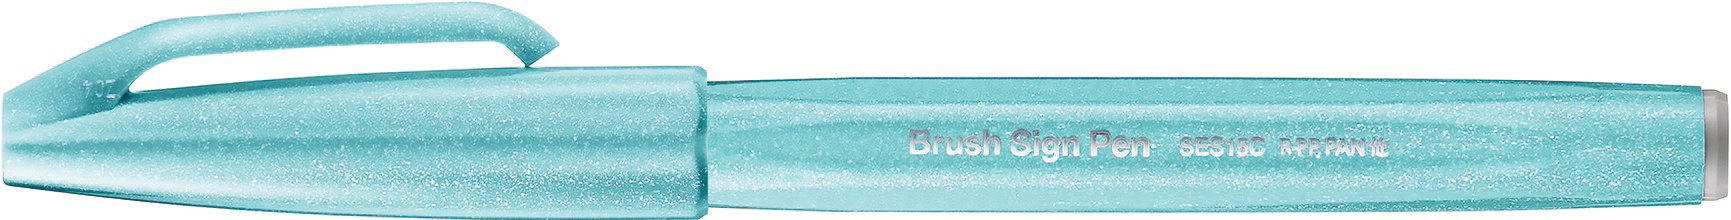 PENTEL Brush Sign Pen SES15C-S2 bleu eau